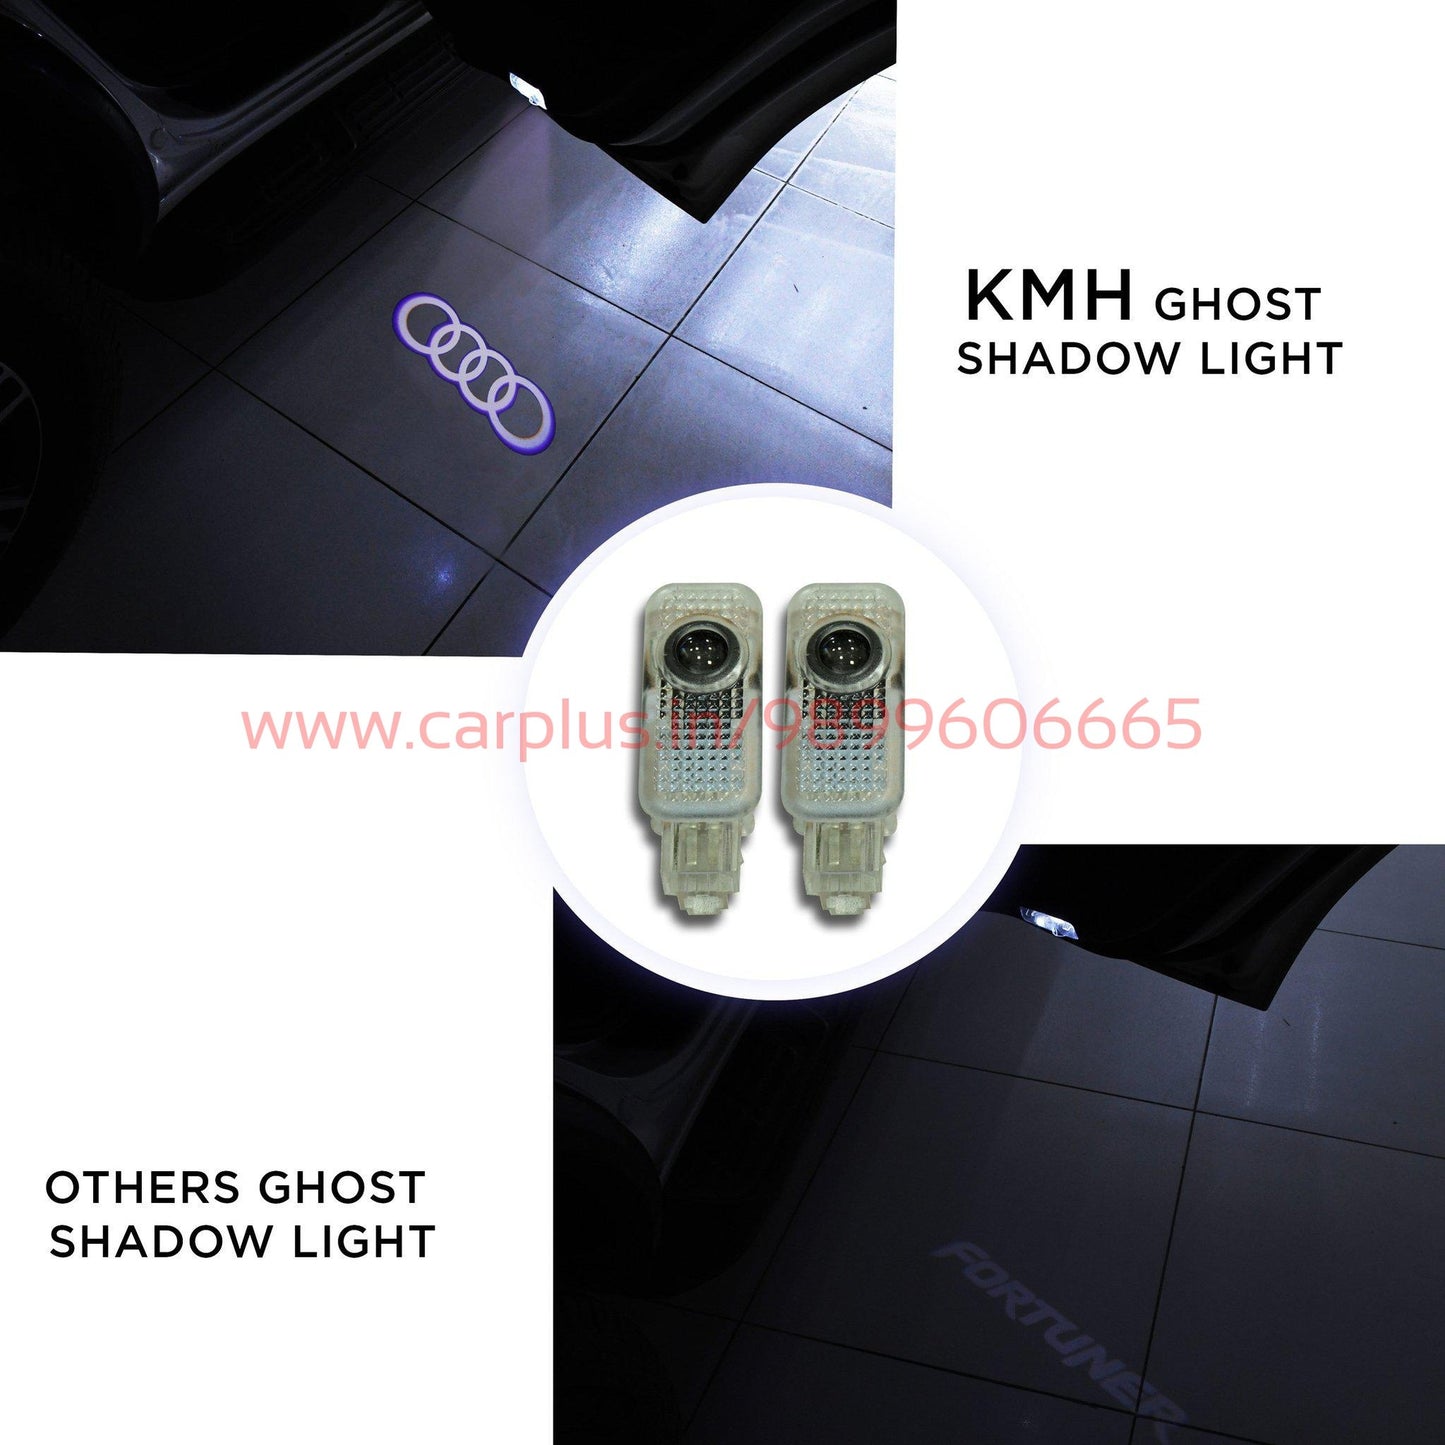 
                  
                    KMH Premium High Quality Ghost Shadow Light for Audi (Set of 2pcs) KMH-GHOST SHADOW LIGHT GHOST SHADOW LIGHT.
                  
                